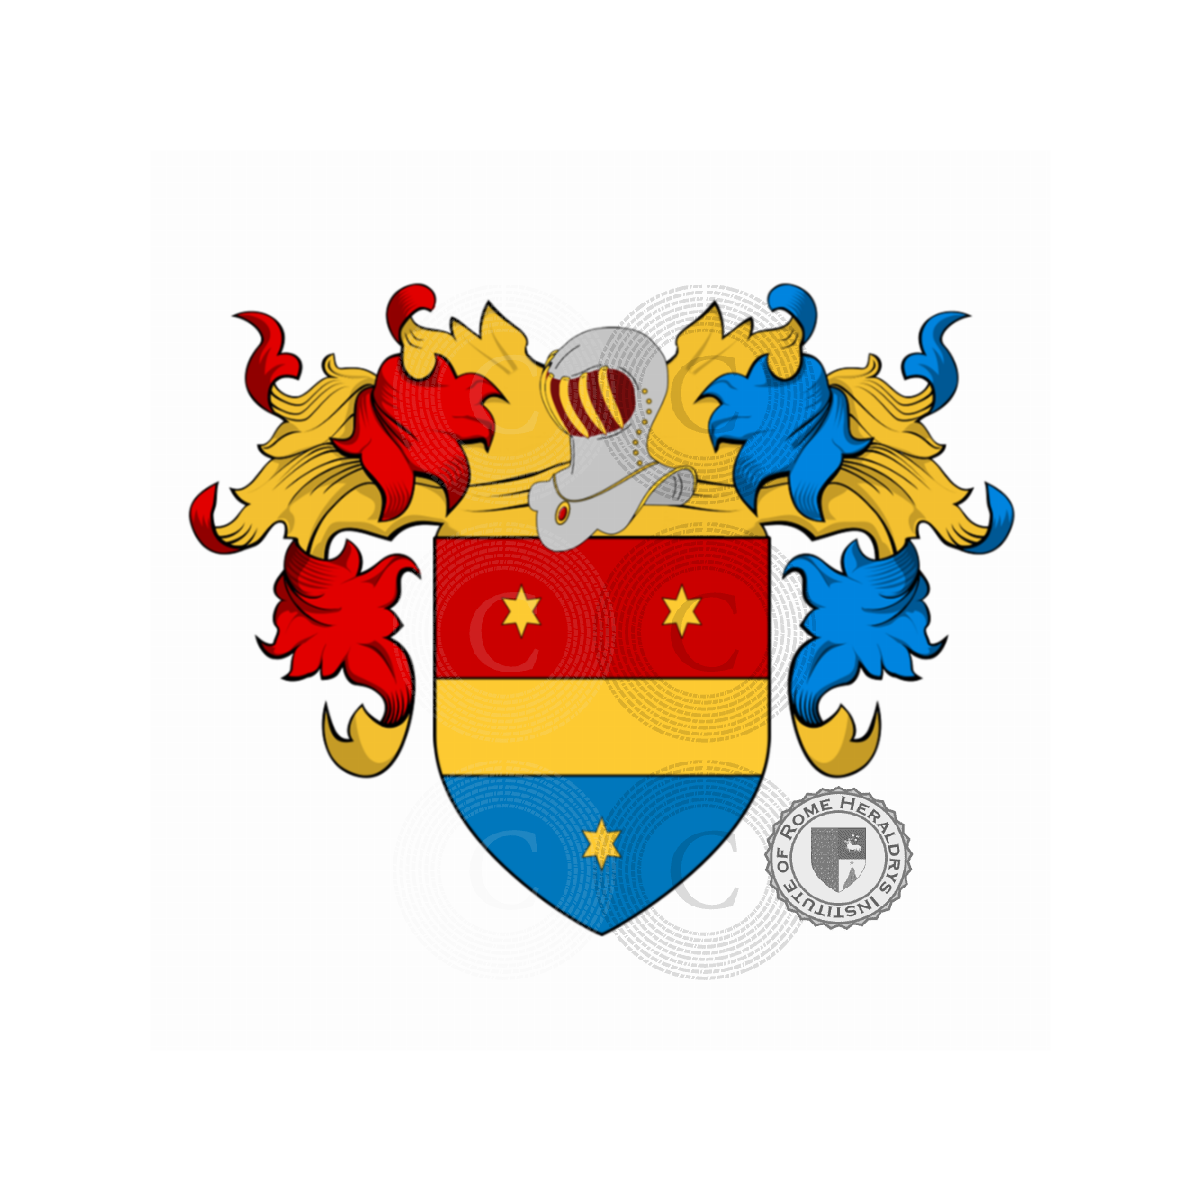 Coat of arms of familyAlbani, Albano,dell'Albani